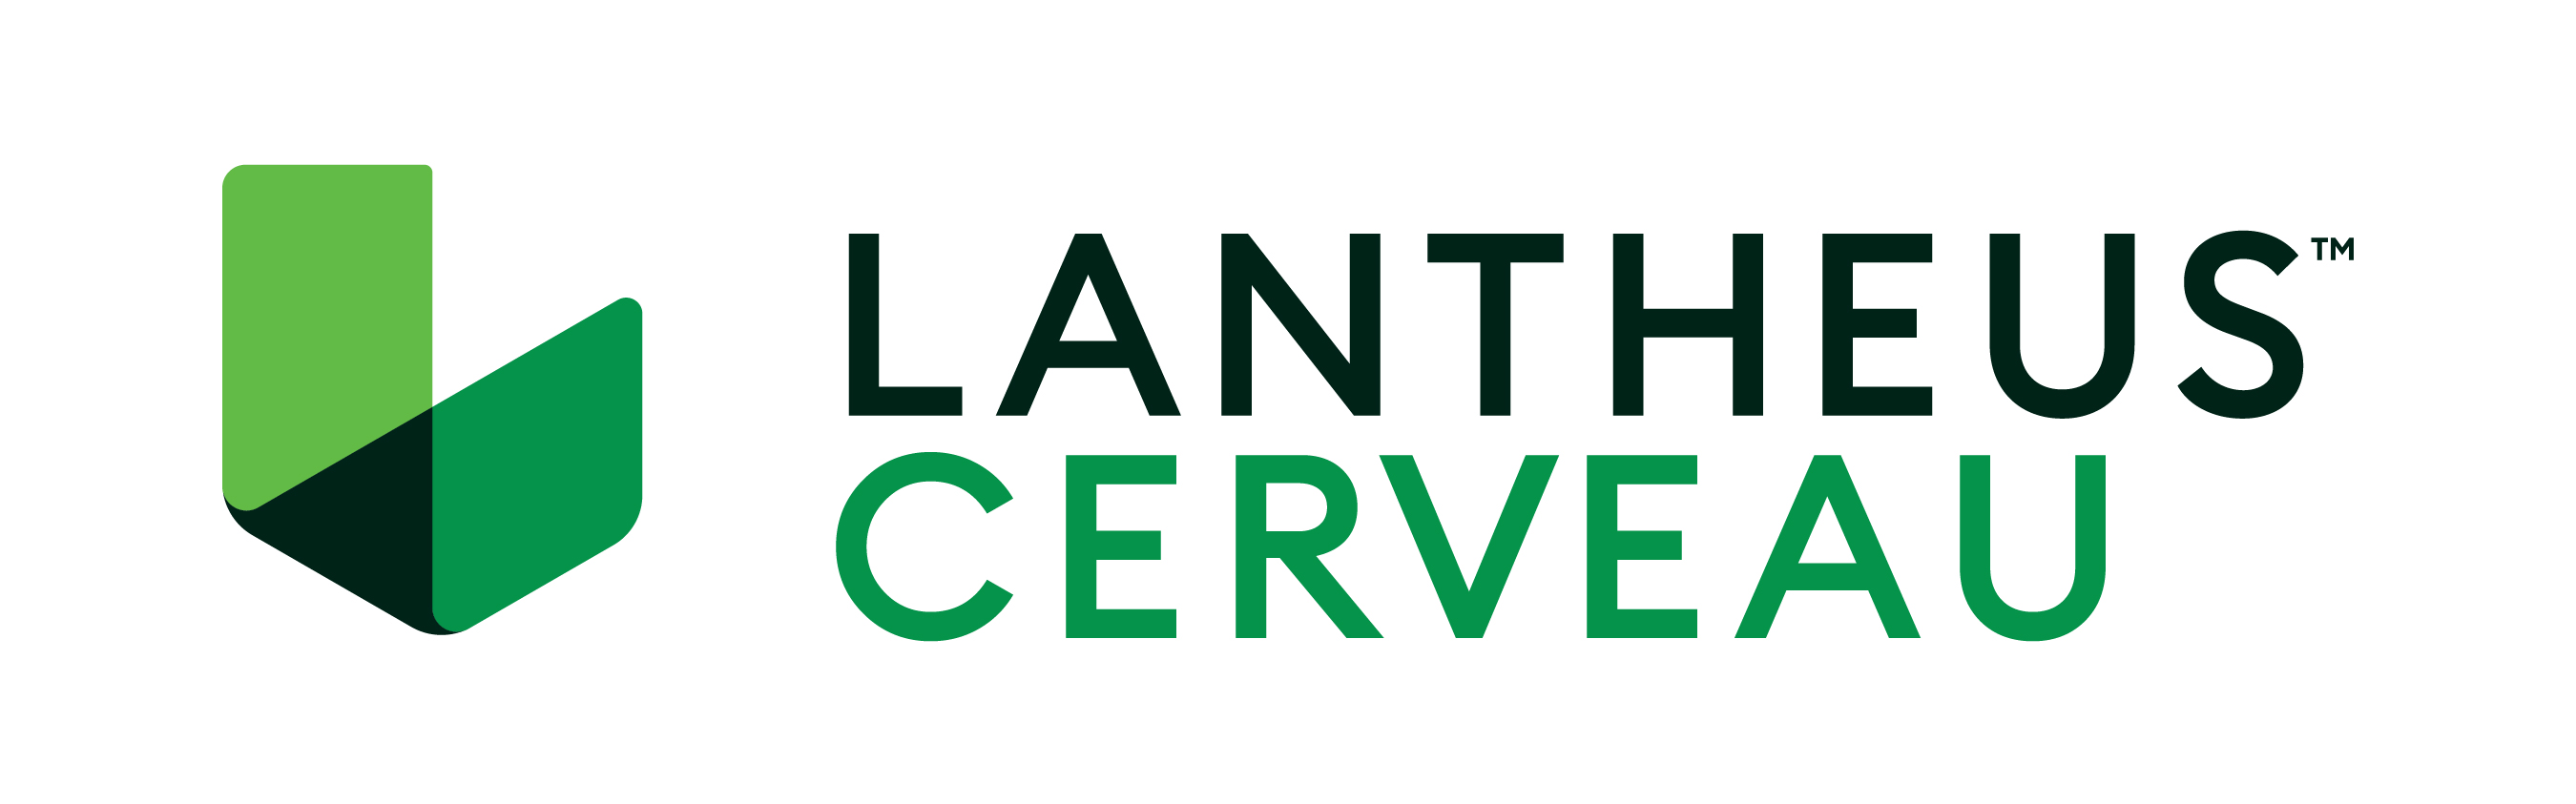 Lantheus Cerveau logo.jpg